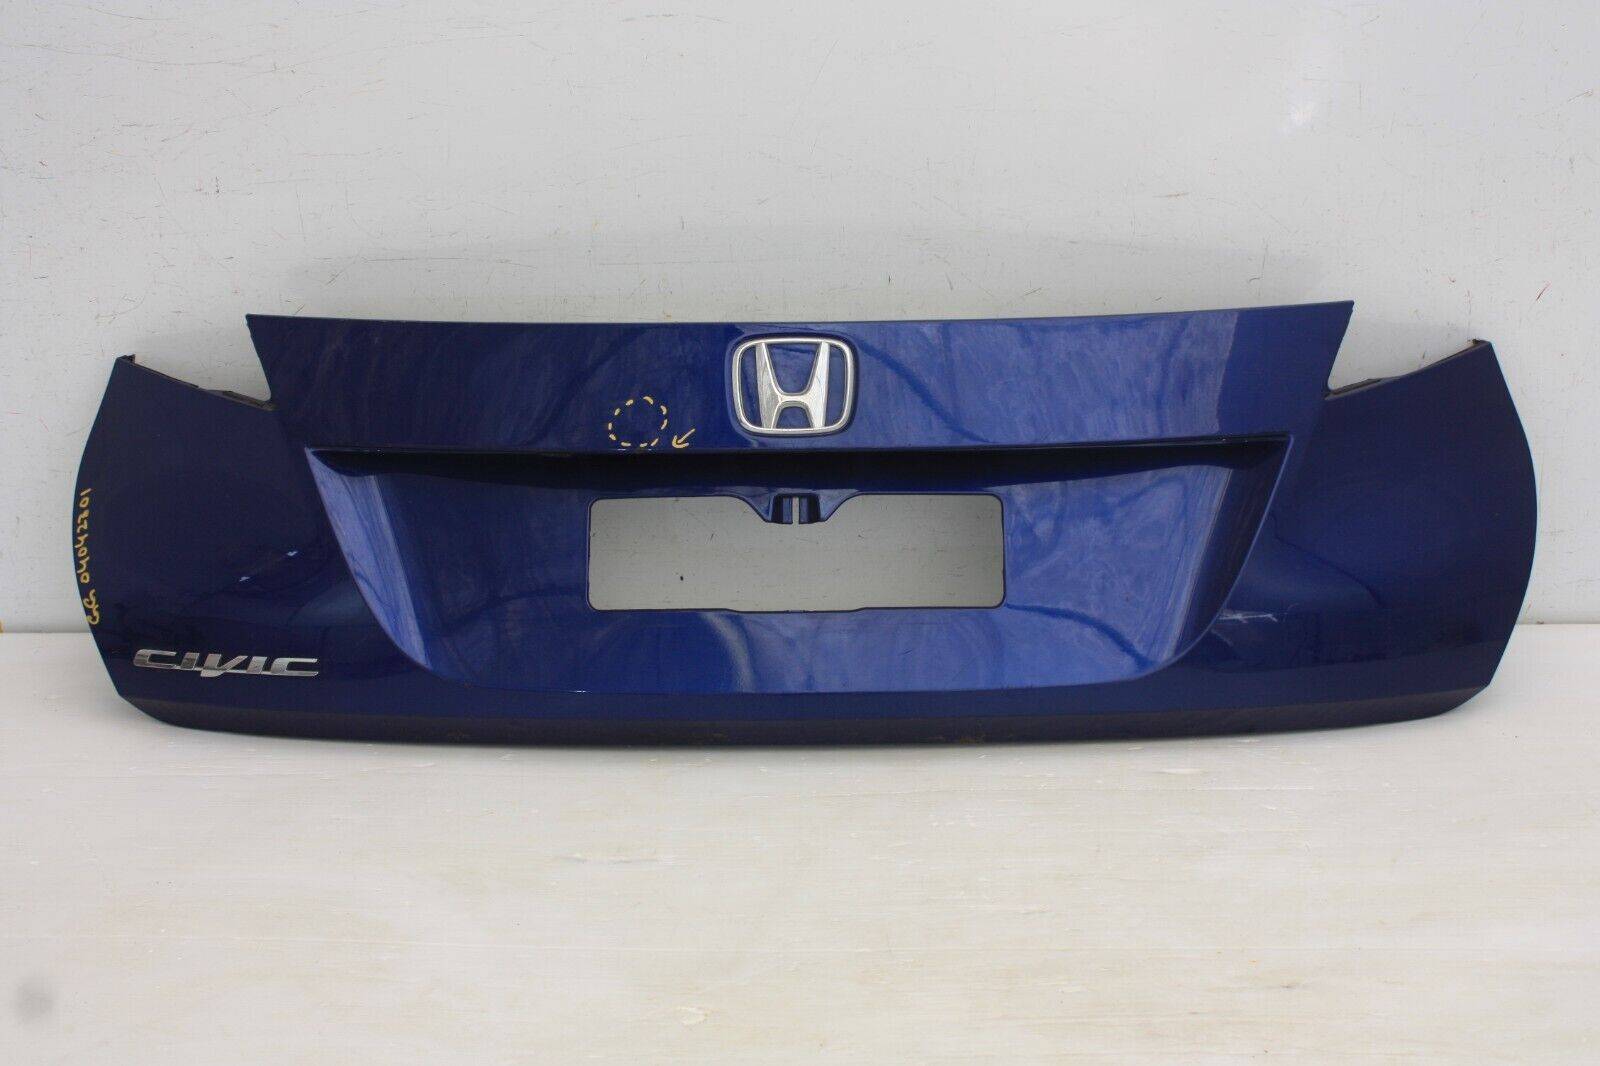 Honda Civic Rear Tailgate 2012 TO 2015 74890 TV0 ZZ00 Genuine 175677230484